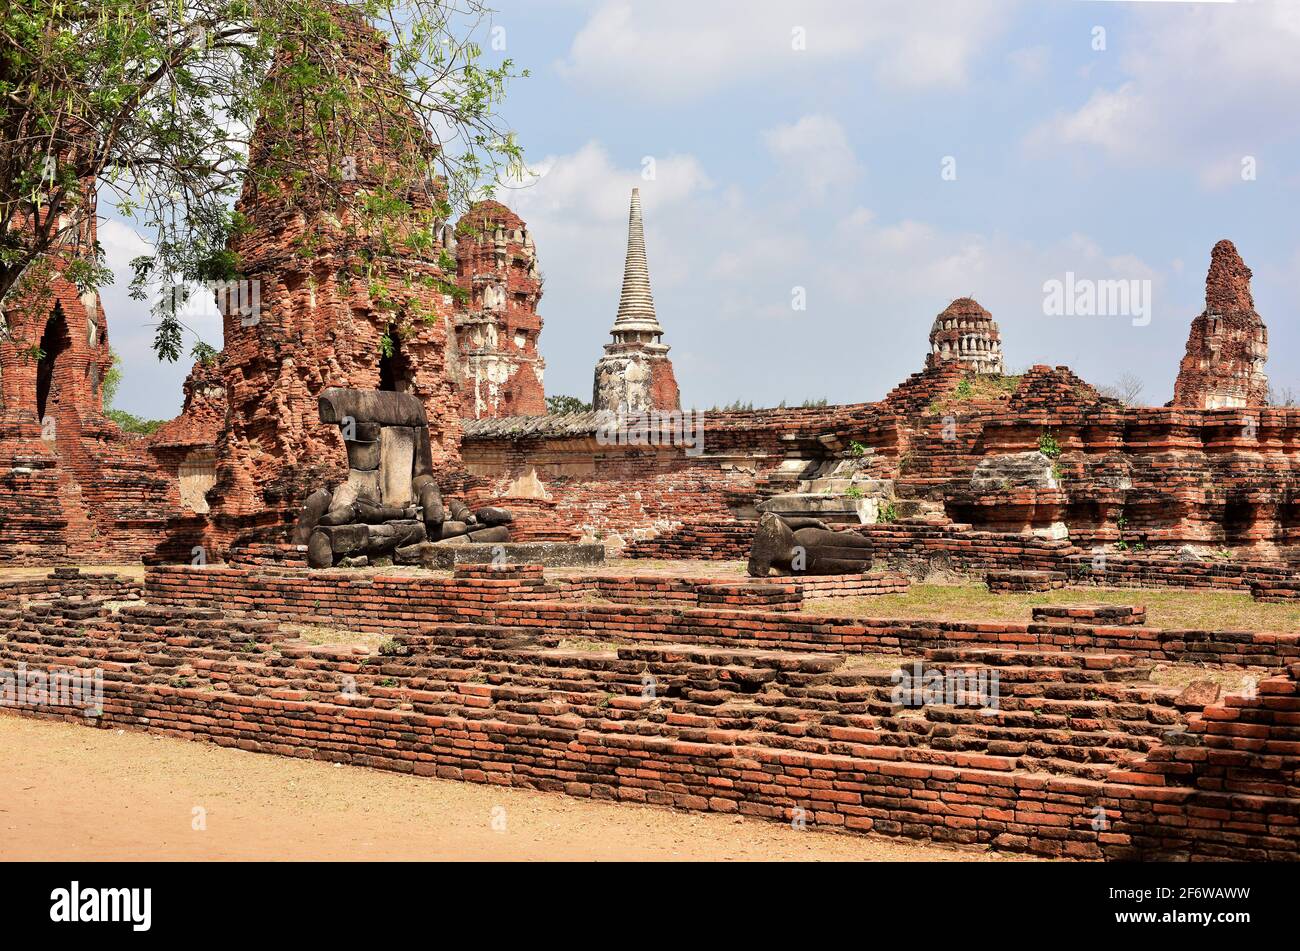 Parque Histórico de Ayutthaya, templo budista Wat Mahathat (siglo 14th, Patrimonio de la Humanidad). Phra Nakhon Si Ayutthaya, Tailandia. Foto de stock